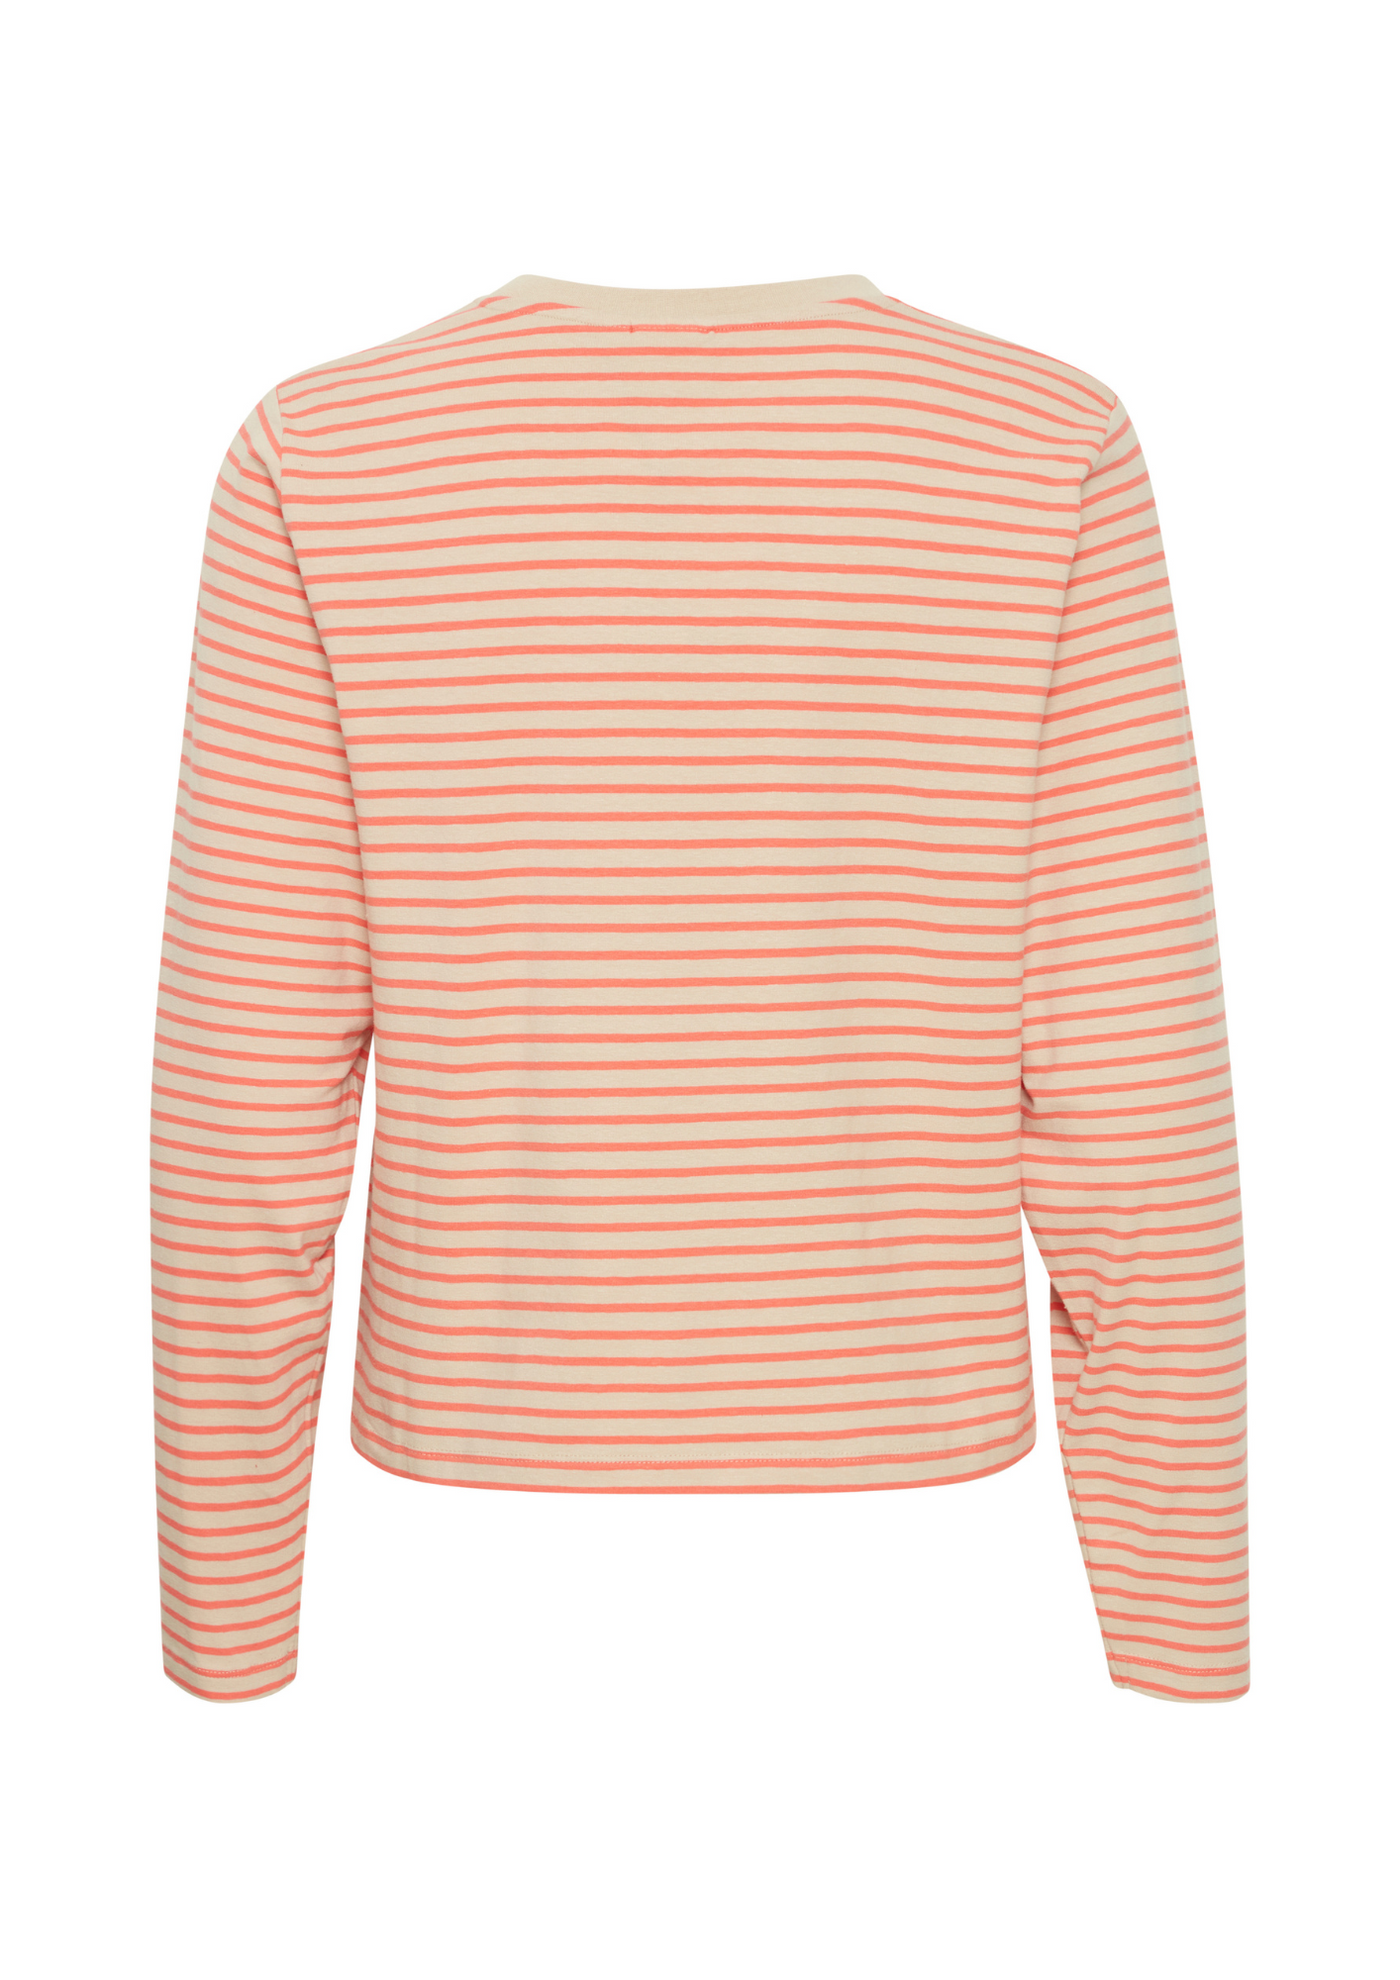 Ichi |Mira LS2 T-Shirt Hot Coral Stripe